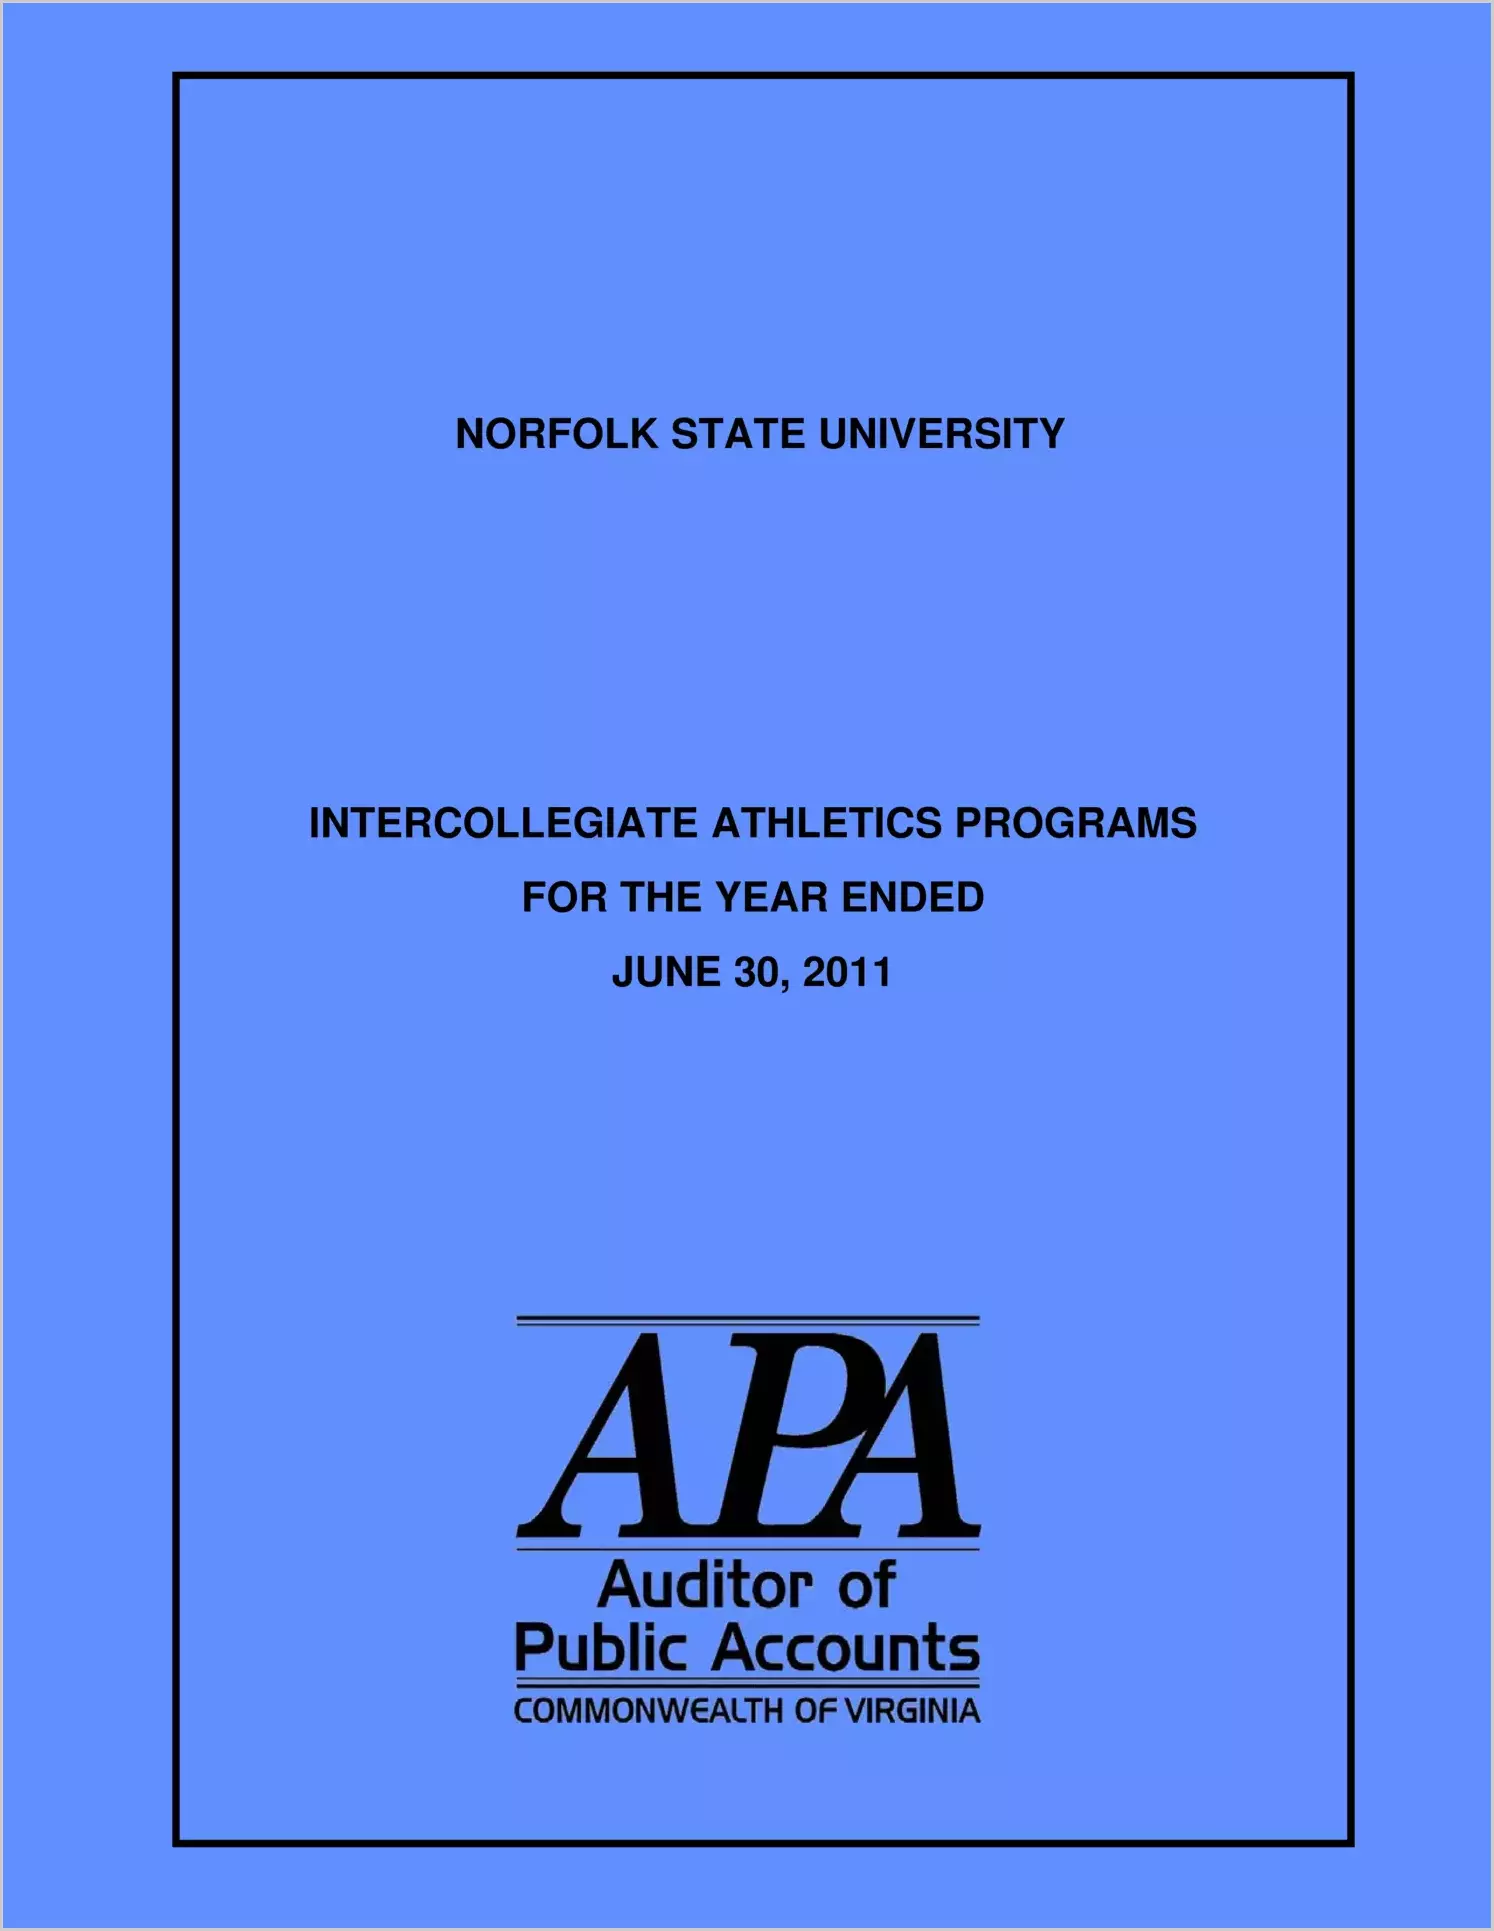 Norfolk State University Intercollegiate Athletics Programs for the year ended June 30, 2011